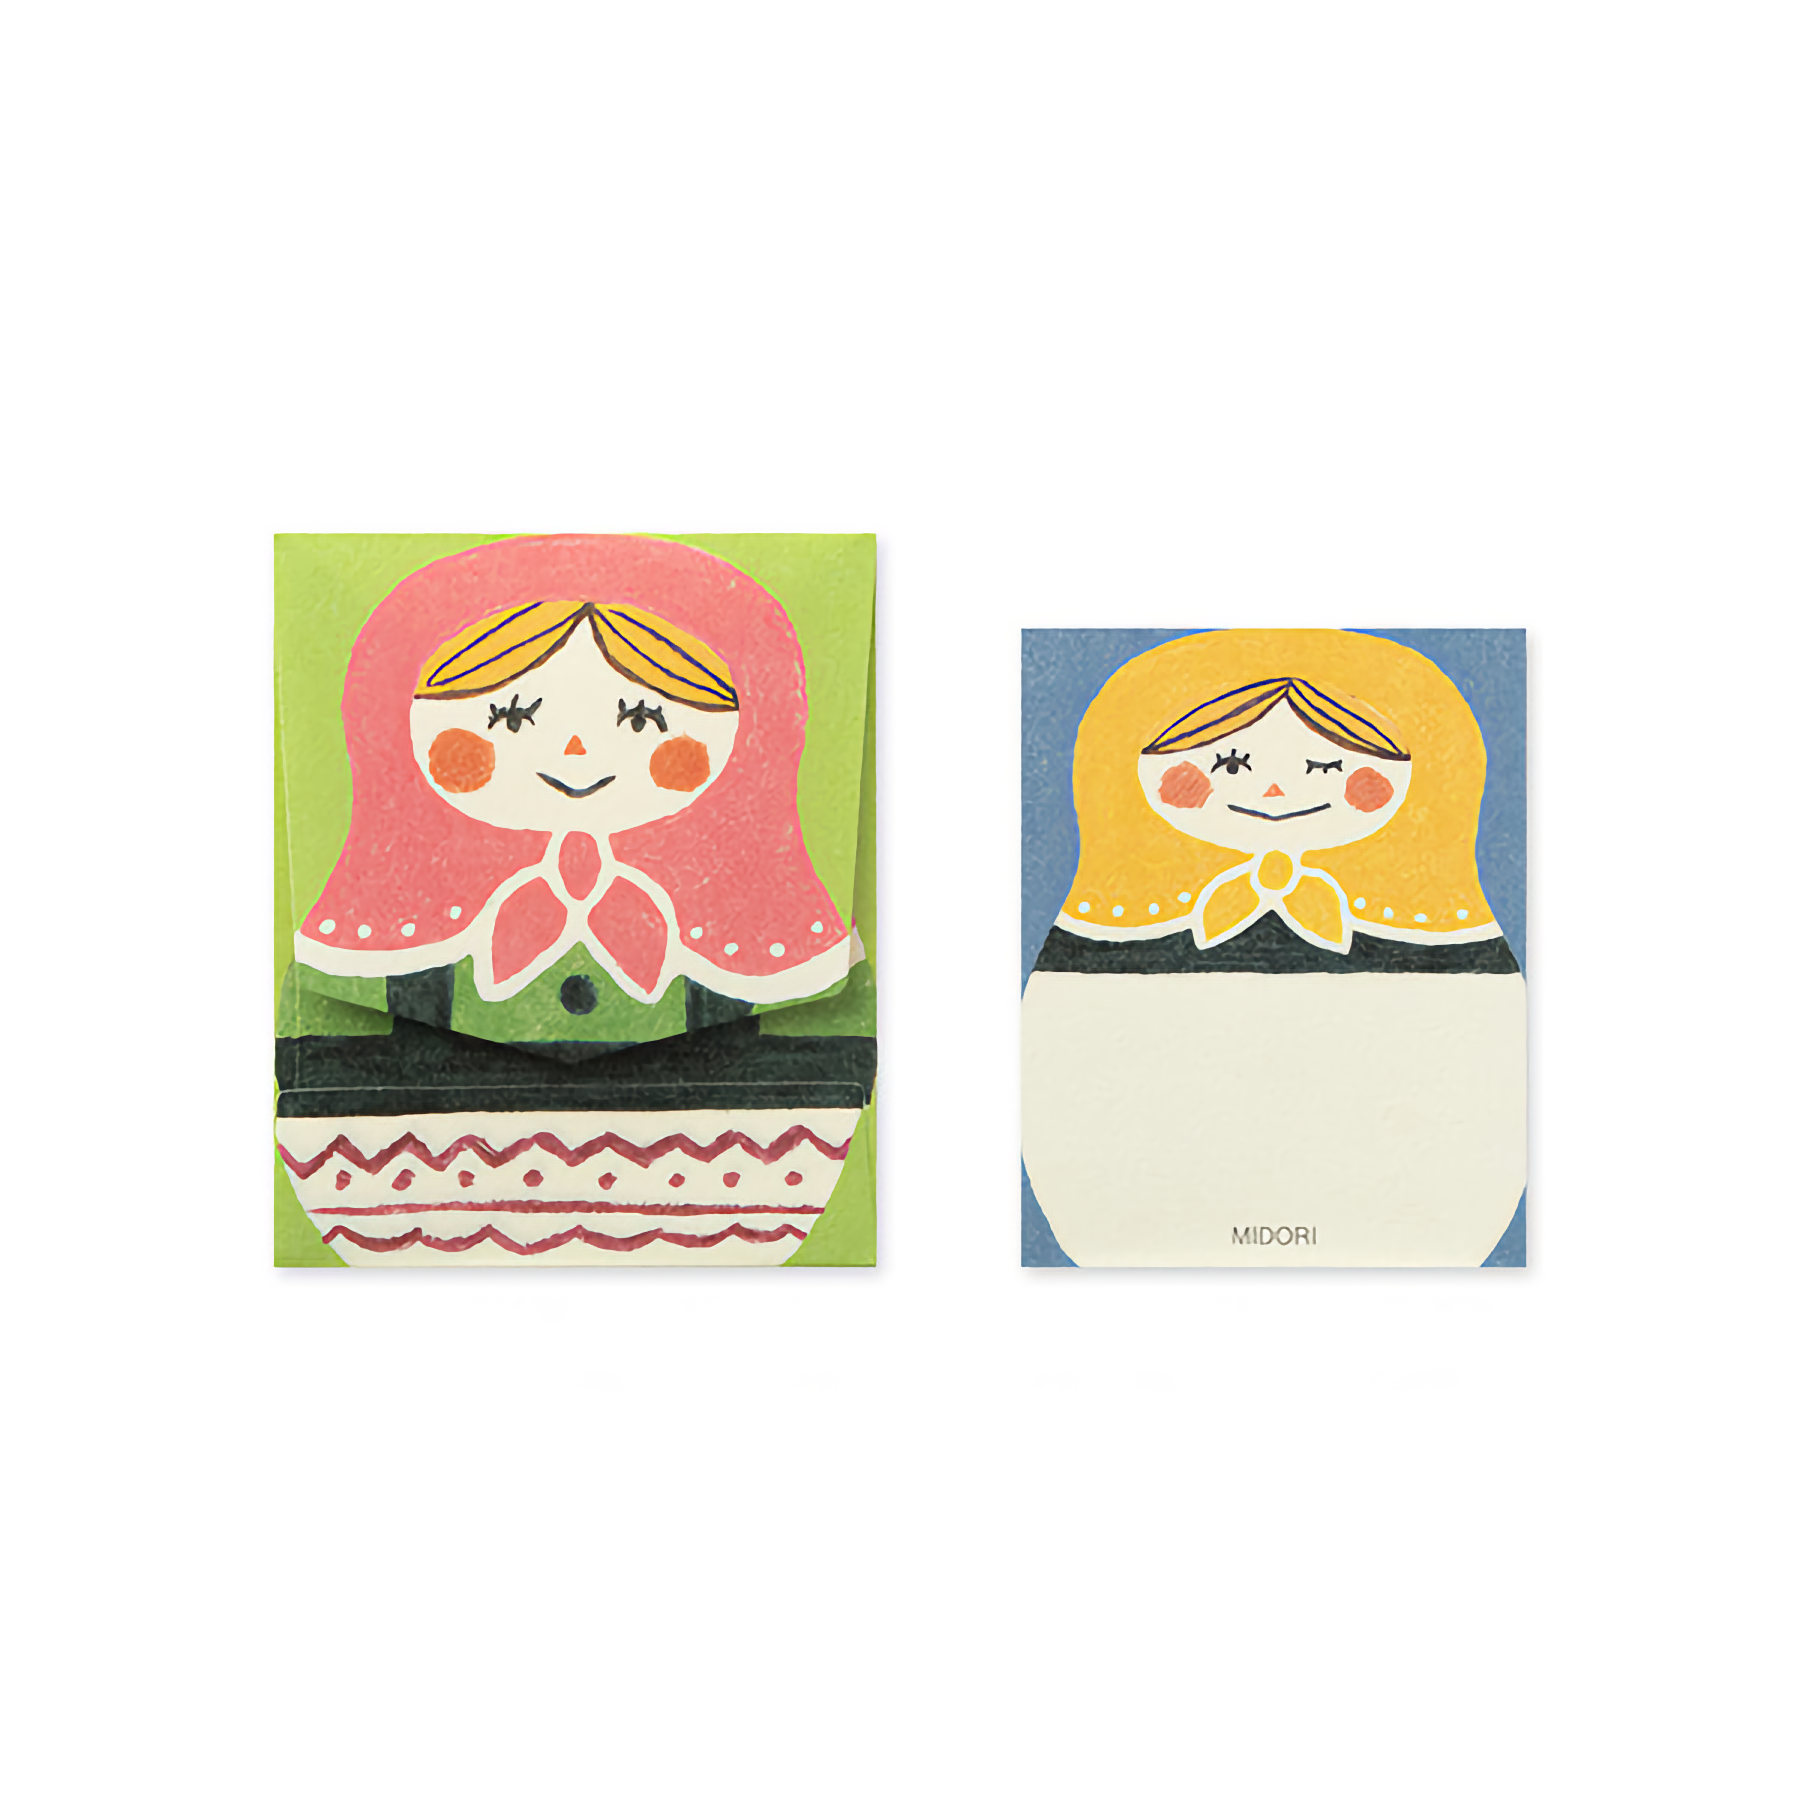 Midori Matryoshka Doll Mini Letter Set